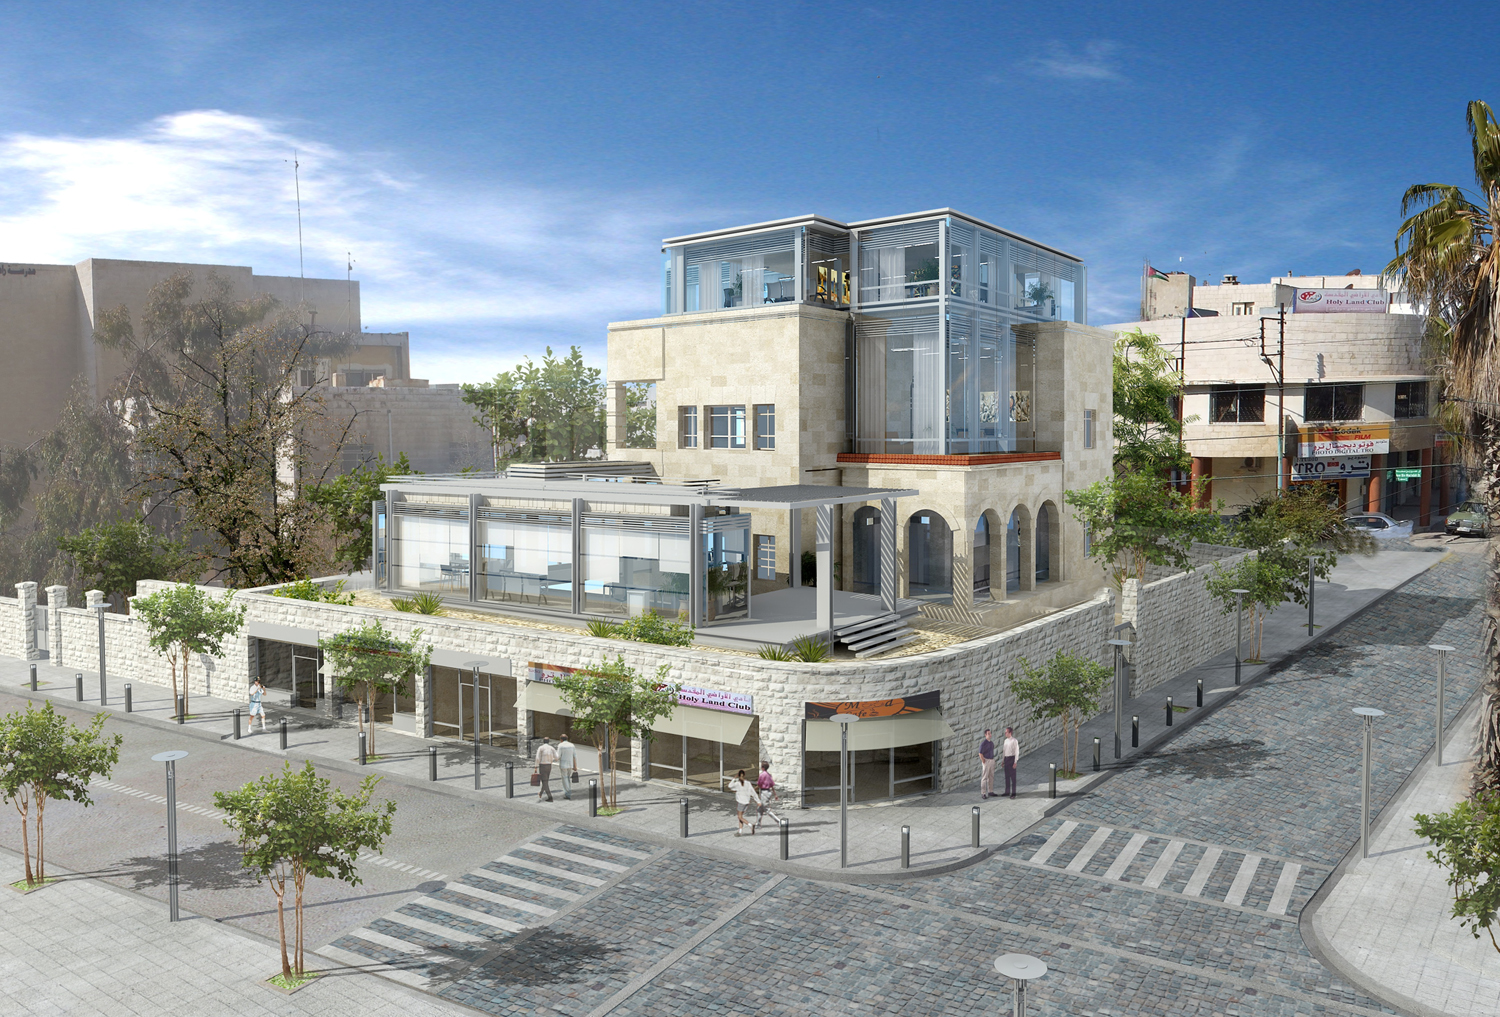 Amman Institute Offices Rehabilitation - Amman Institute proposal, architectural rendering